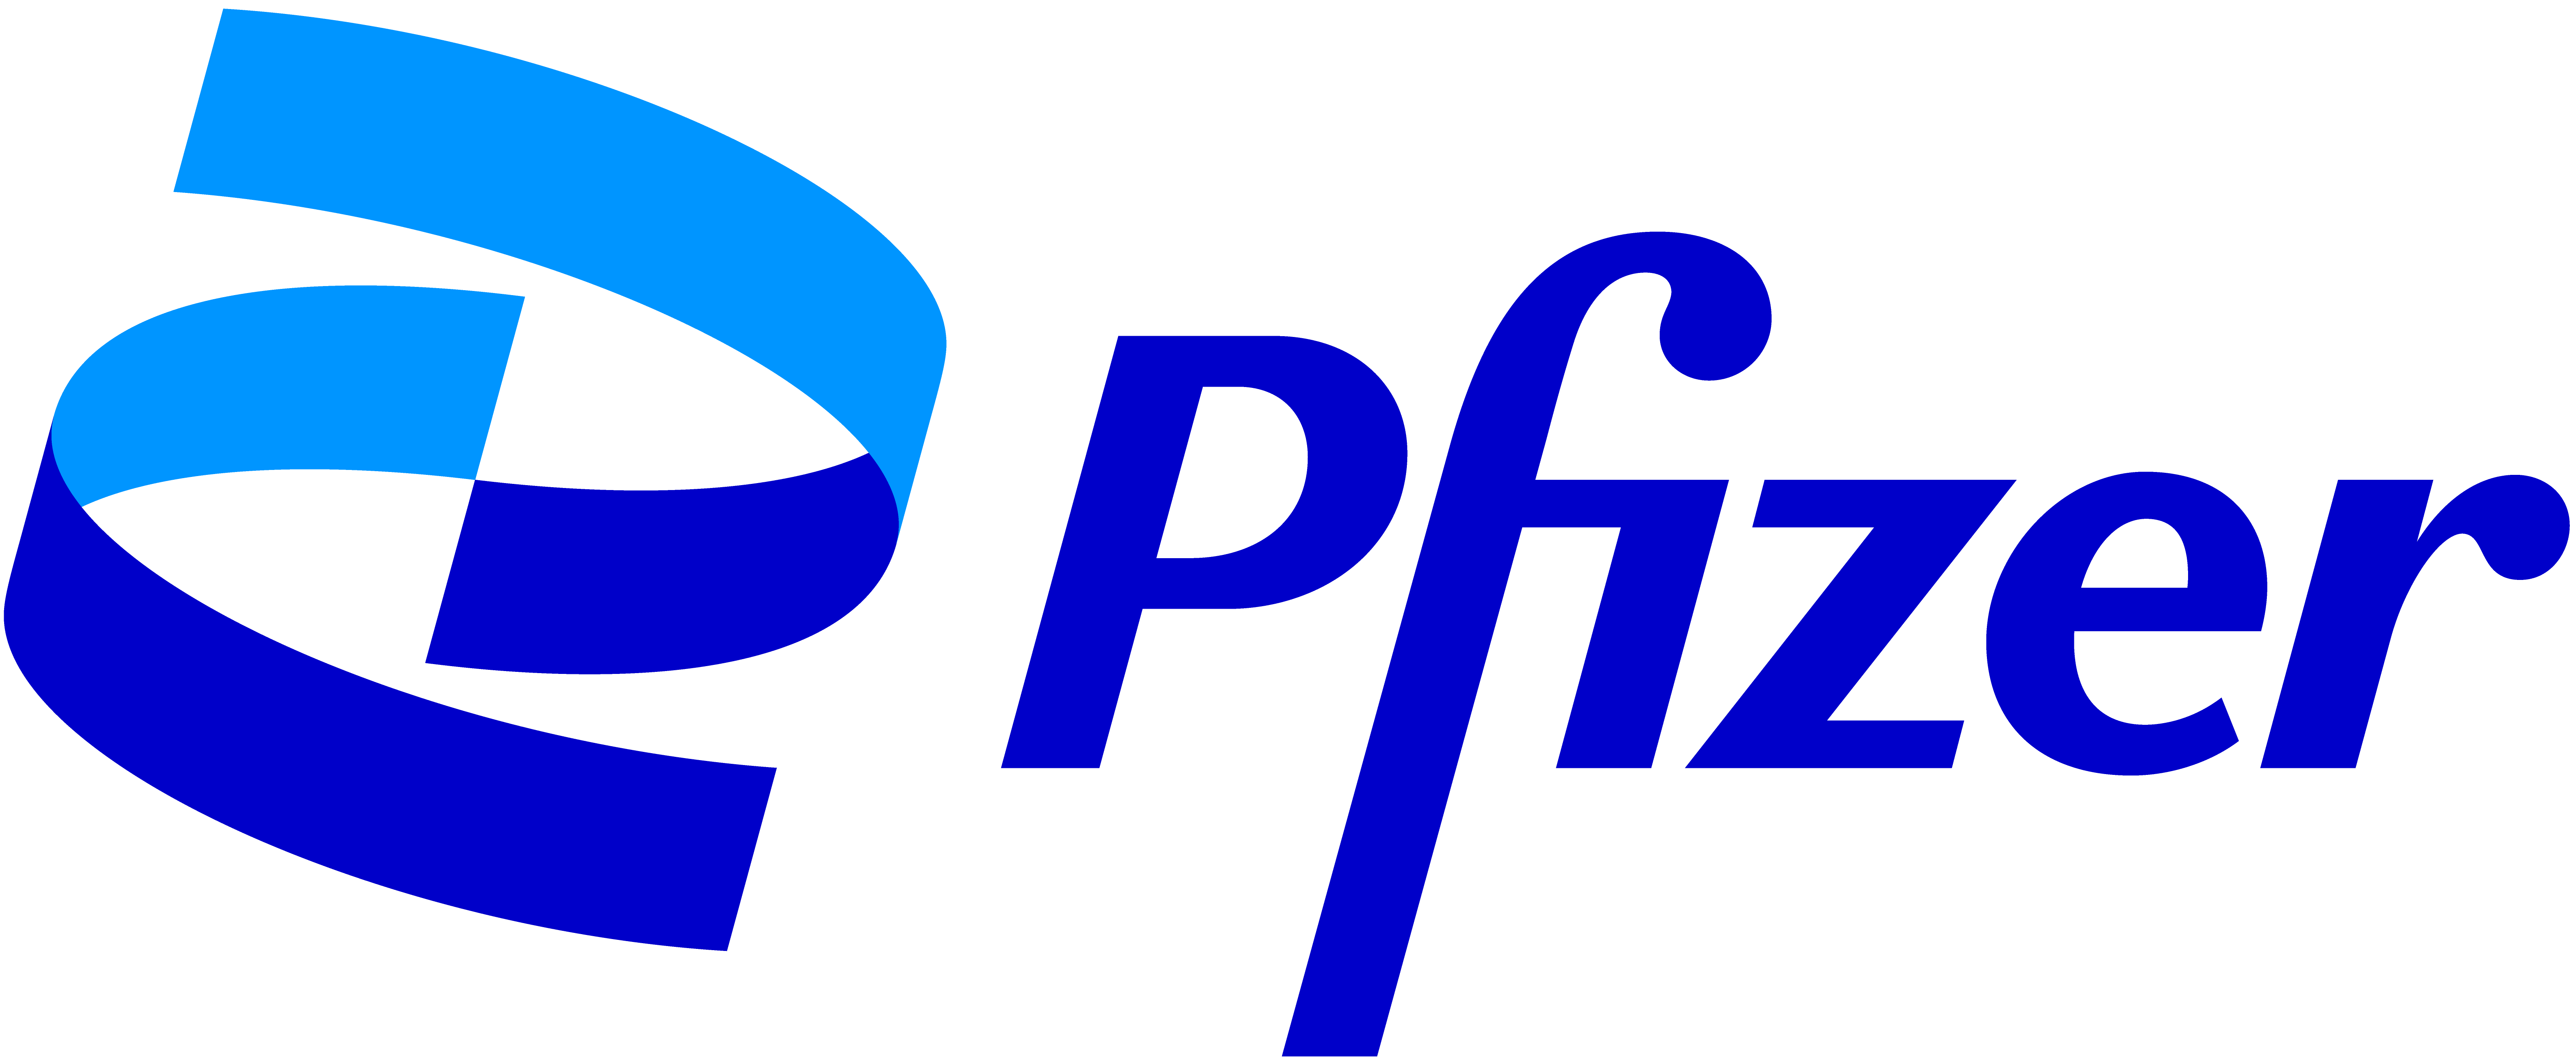 [Translate to English:] Pfizer Logo